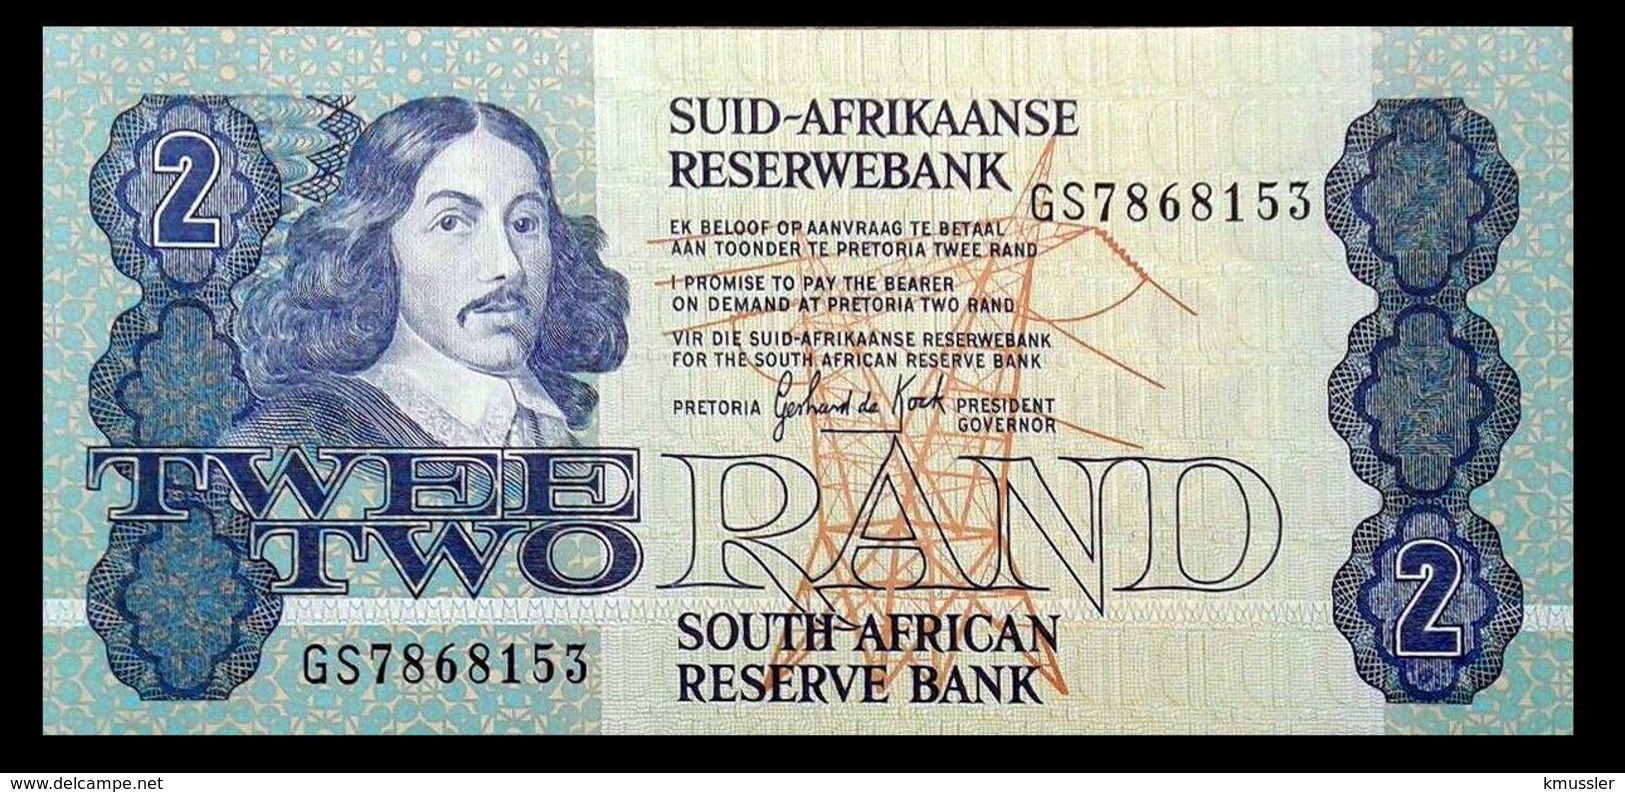 # # # Banknote Südafrika (South Africa) 2 Rand UNC # # # - Sudafrica